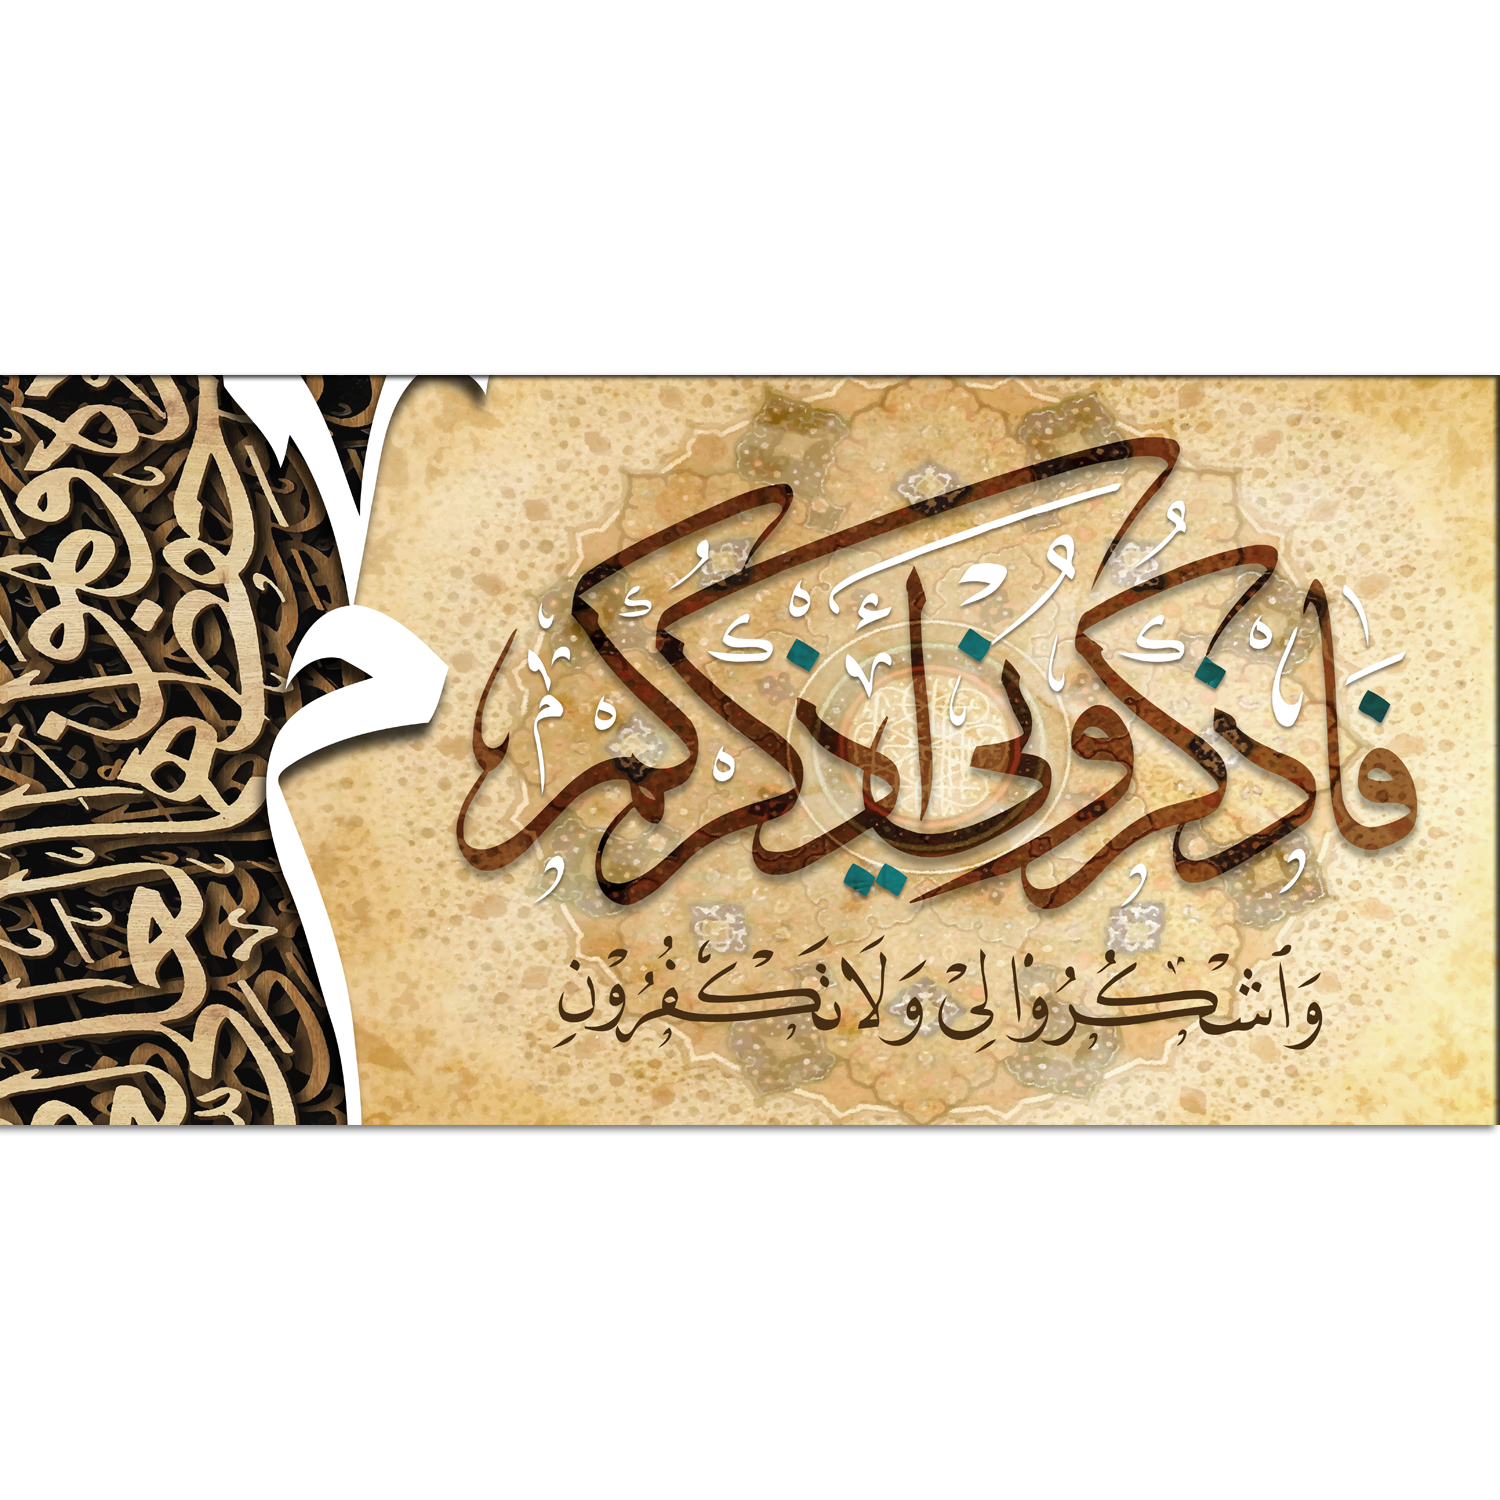 Arabic Islamic calligraphy Canvas Print Wall Painting